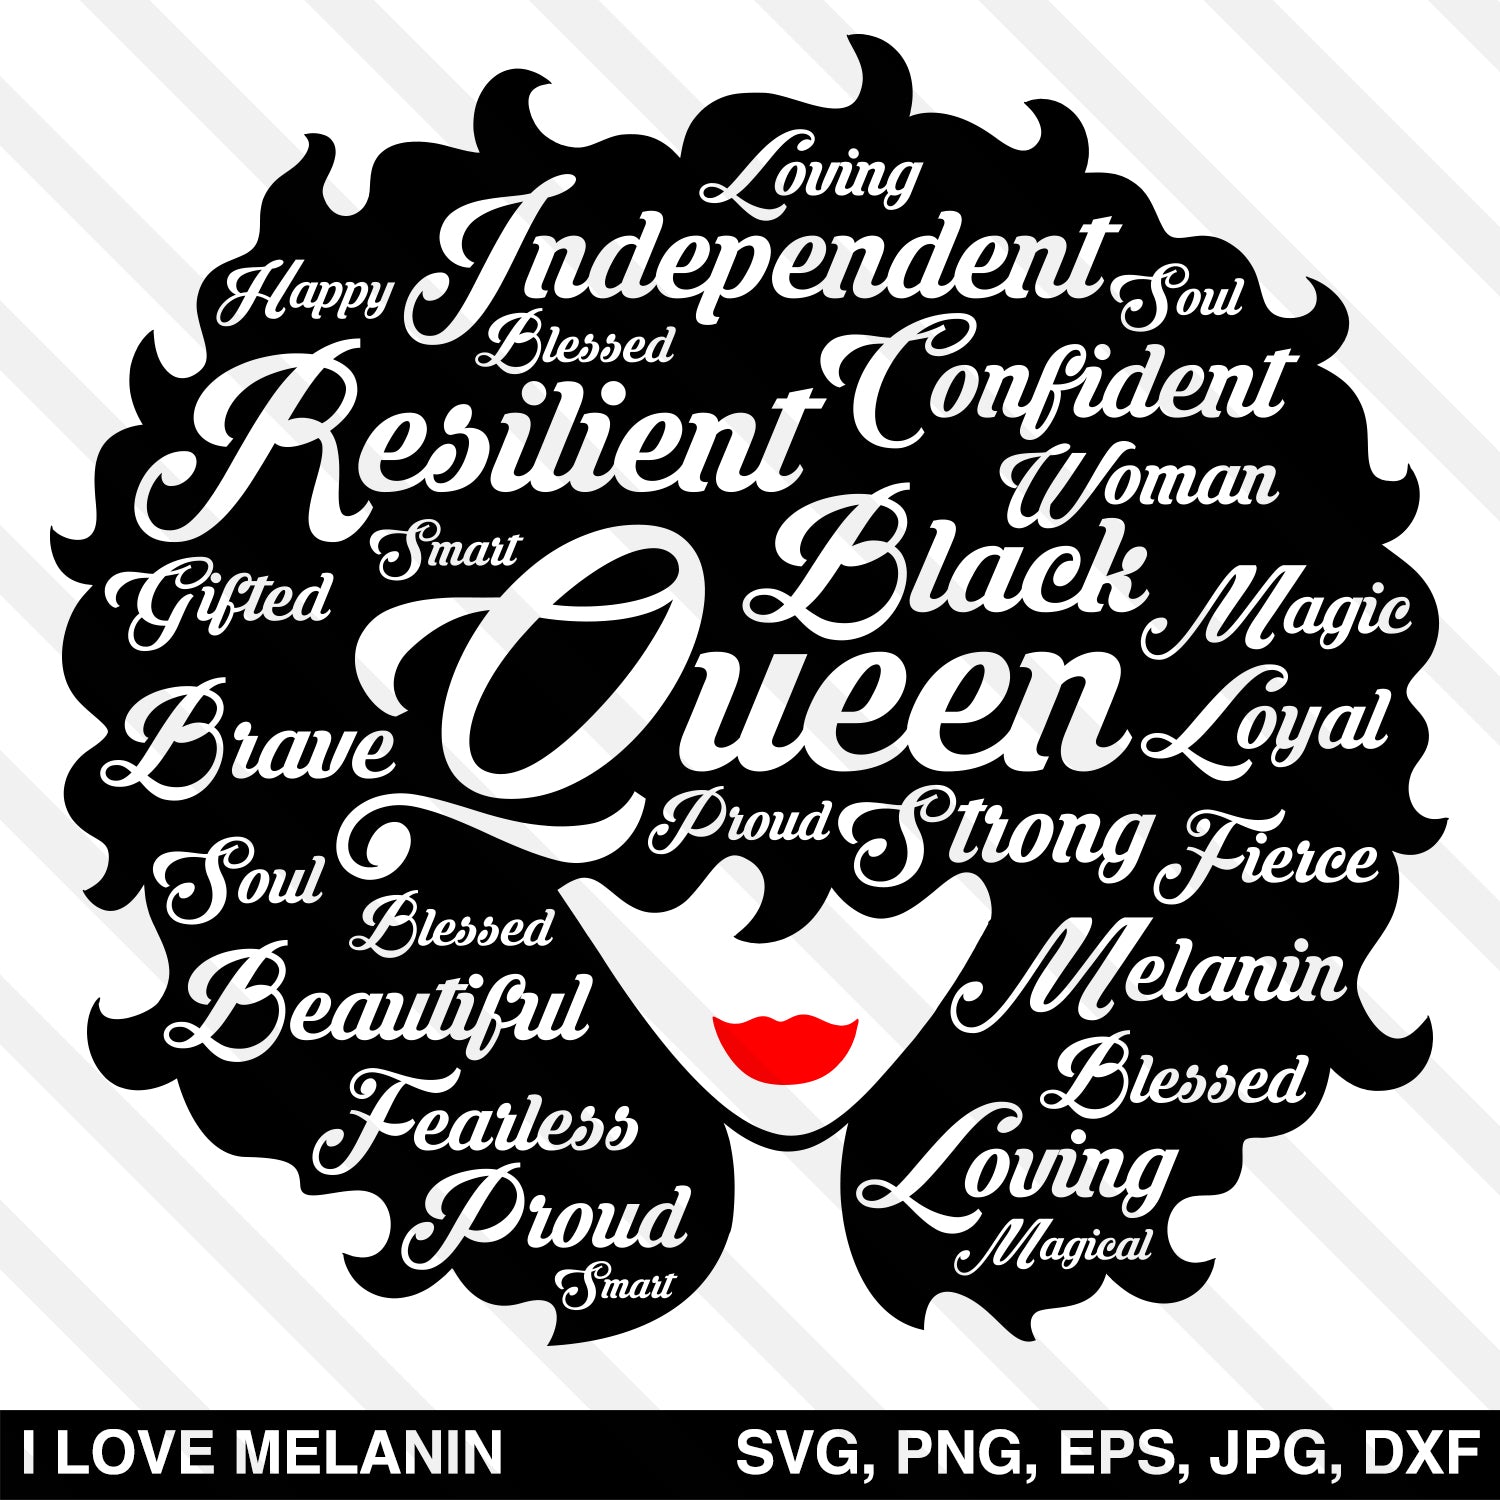 Download Black Queen Afro Woman SVG - I Love Melanin